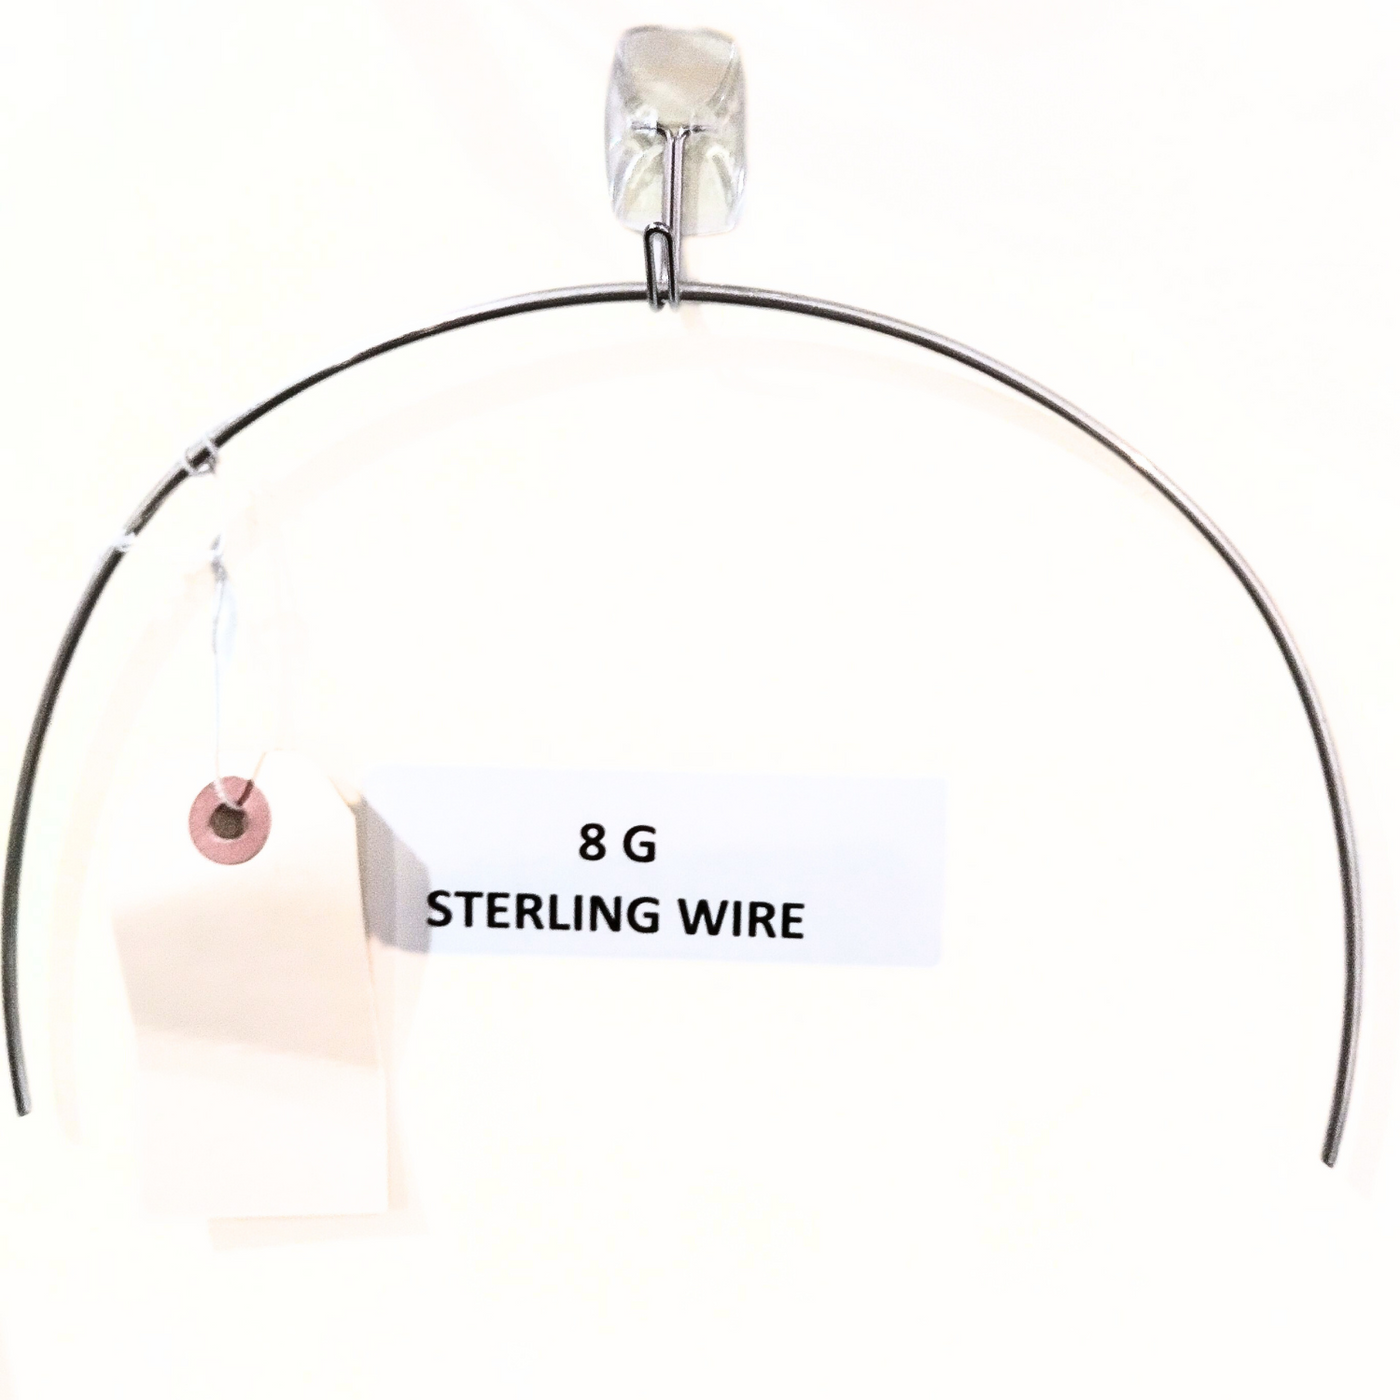 8g Sterling Wire, 1 Inch